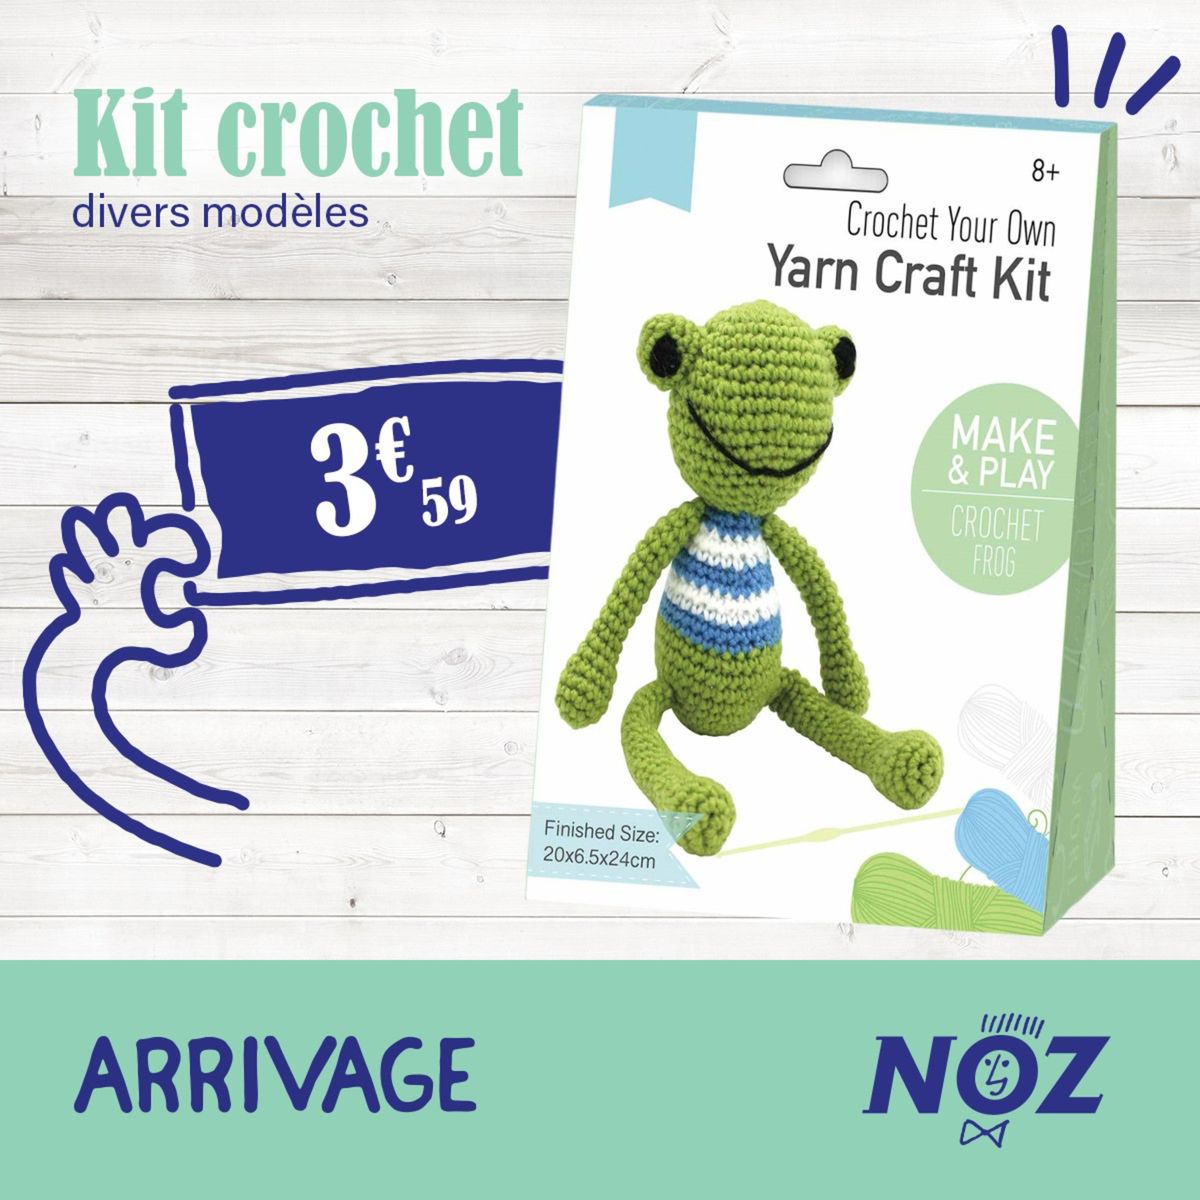 Catalogue Kit crochet, page 00001